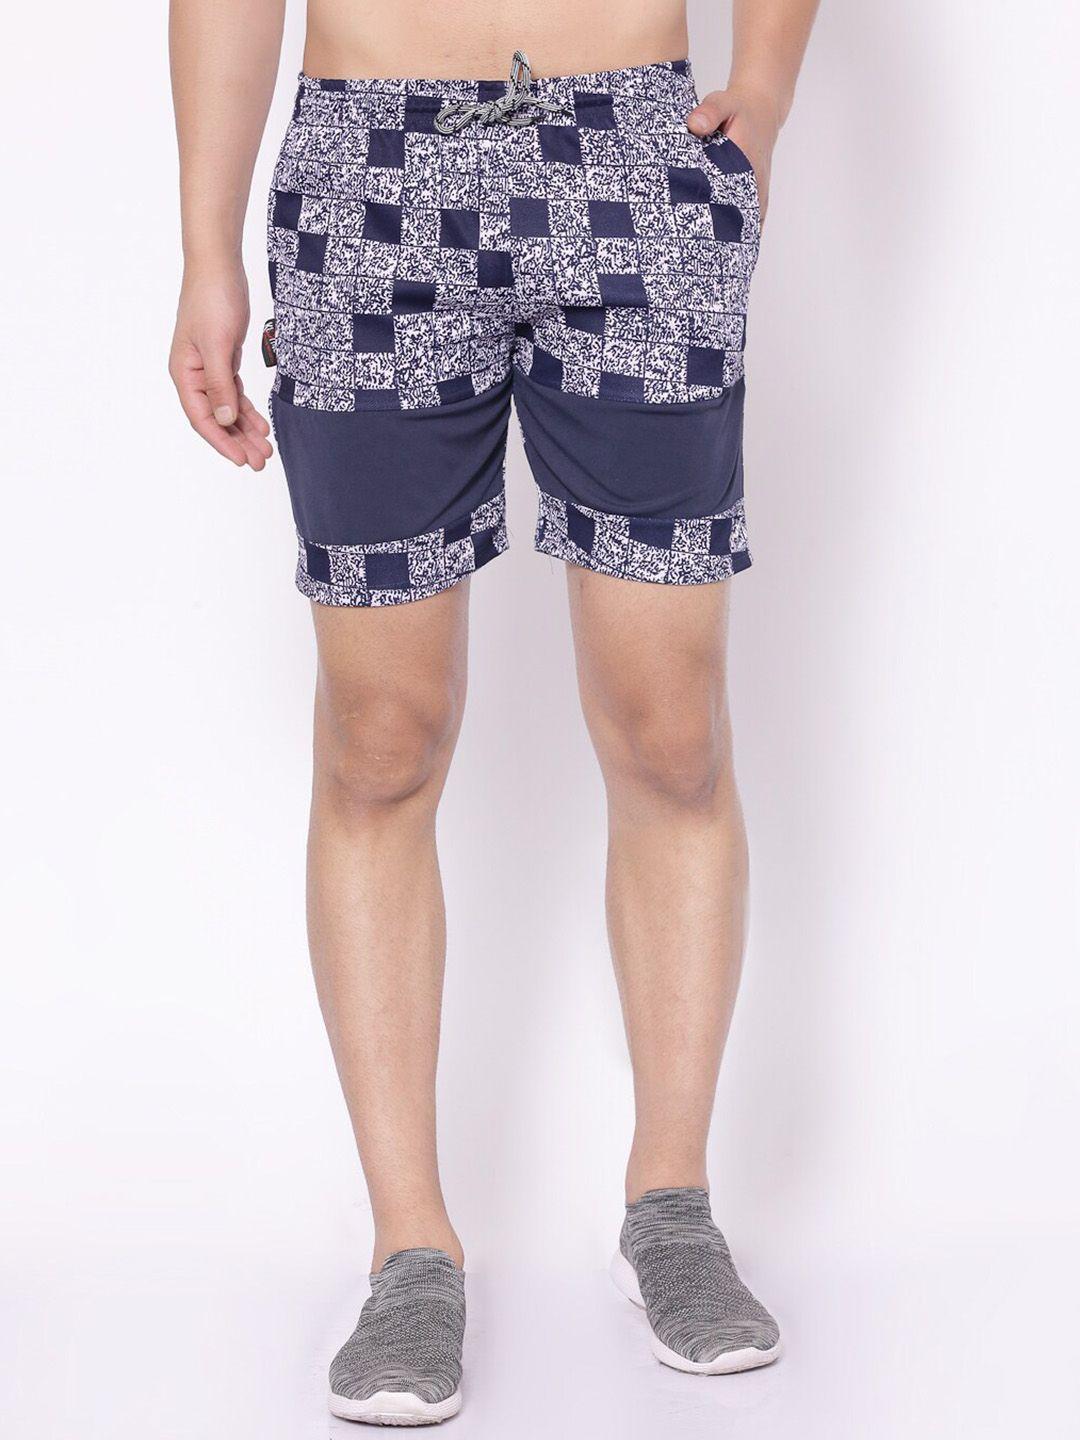 klotthe geometric printed rapid dry sports shorts